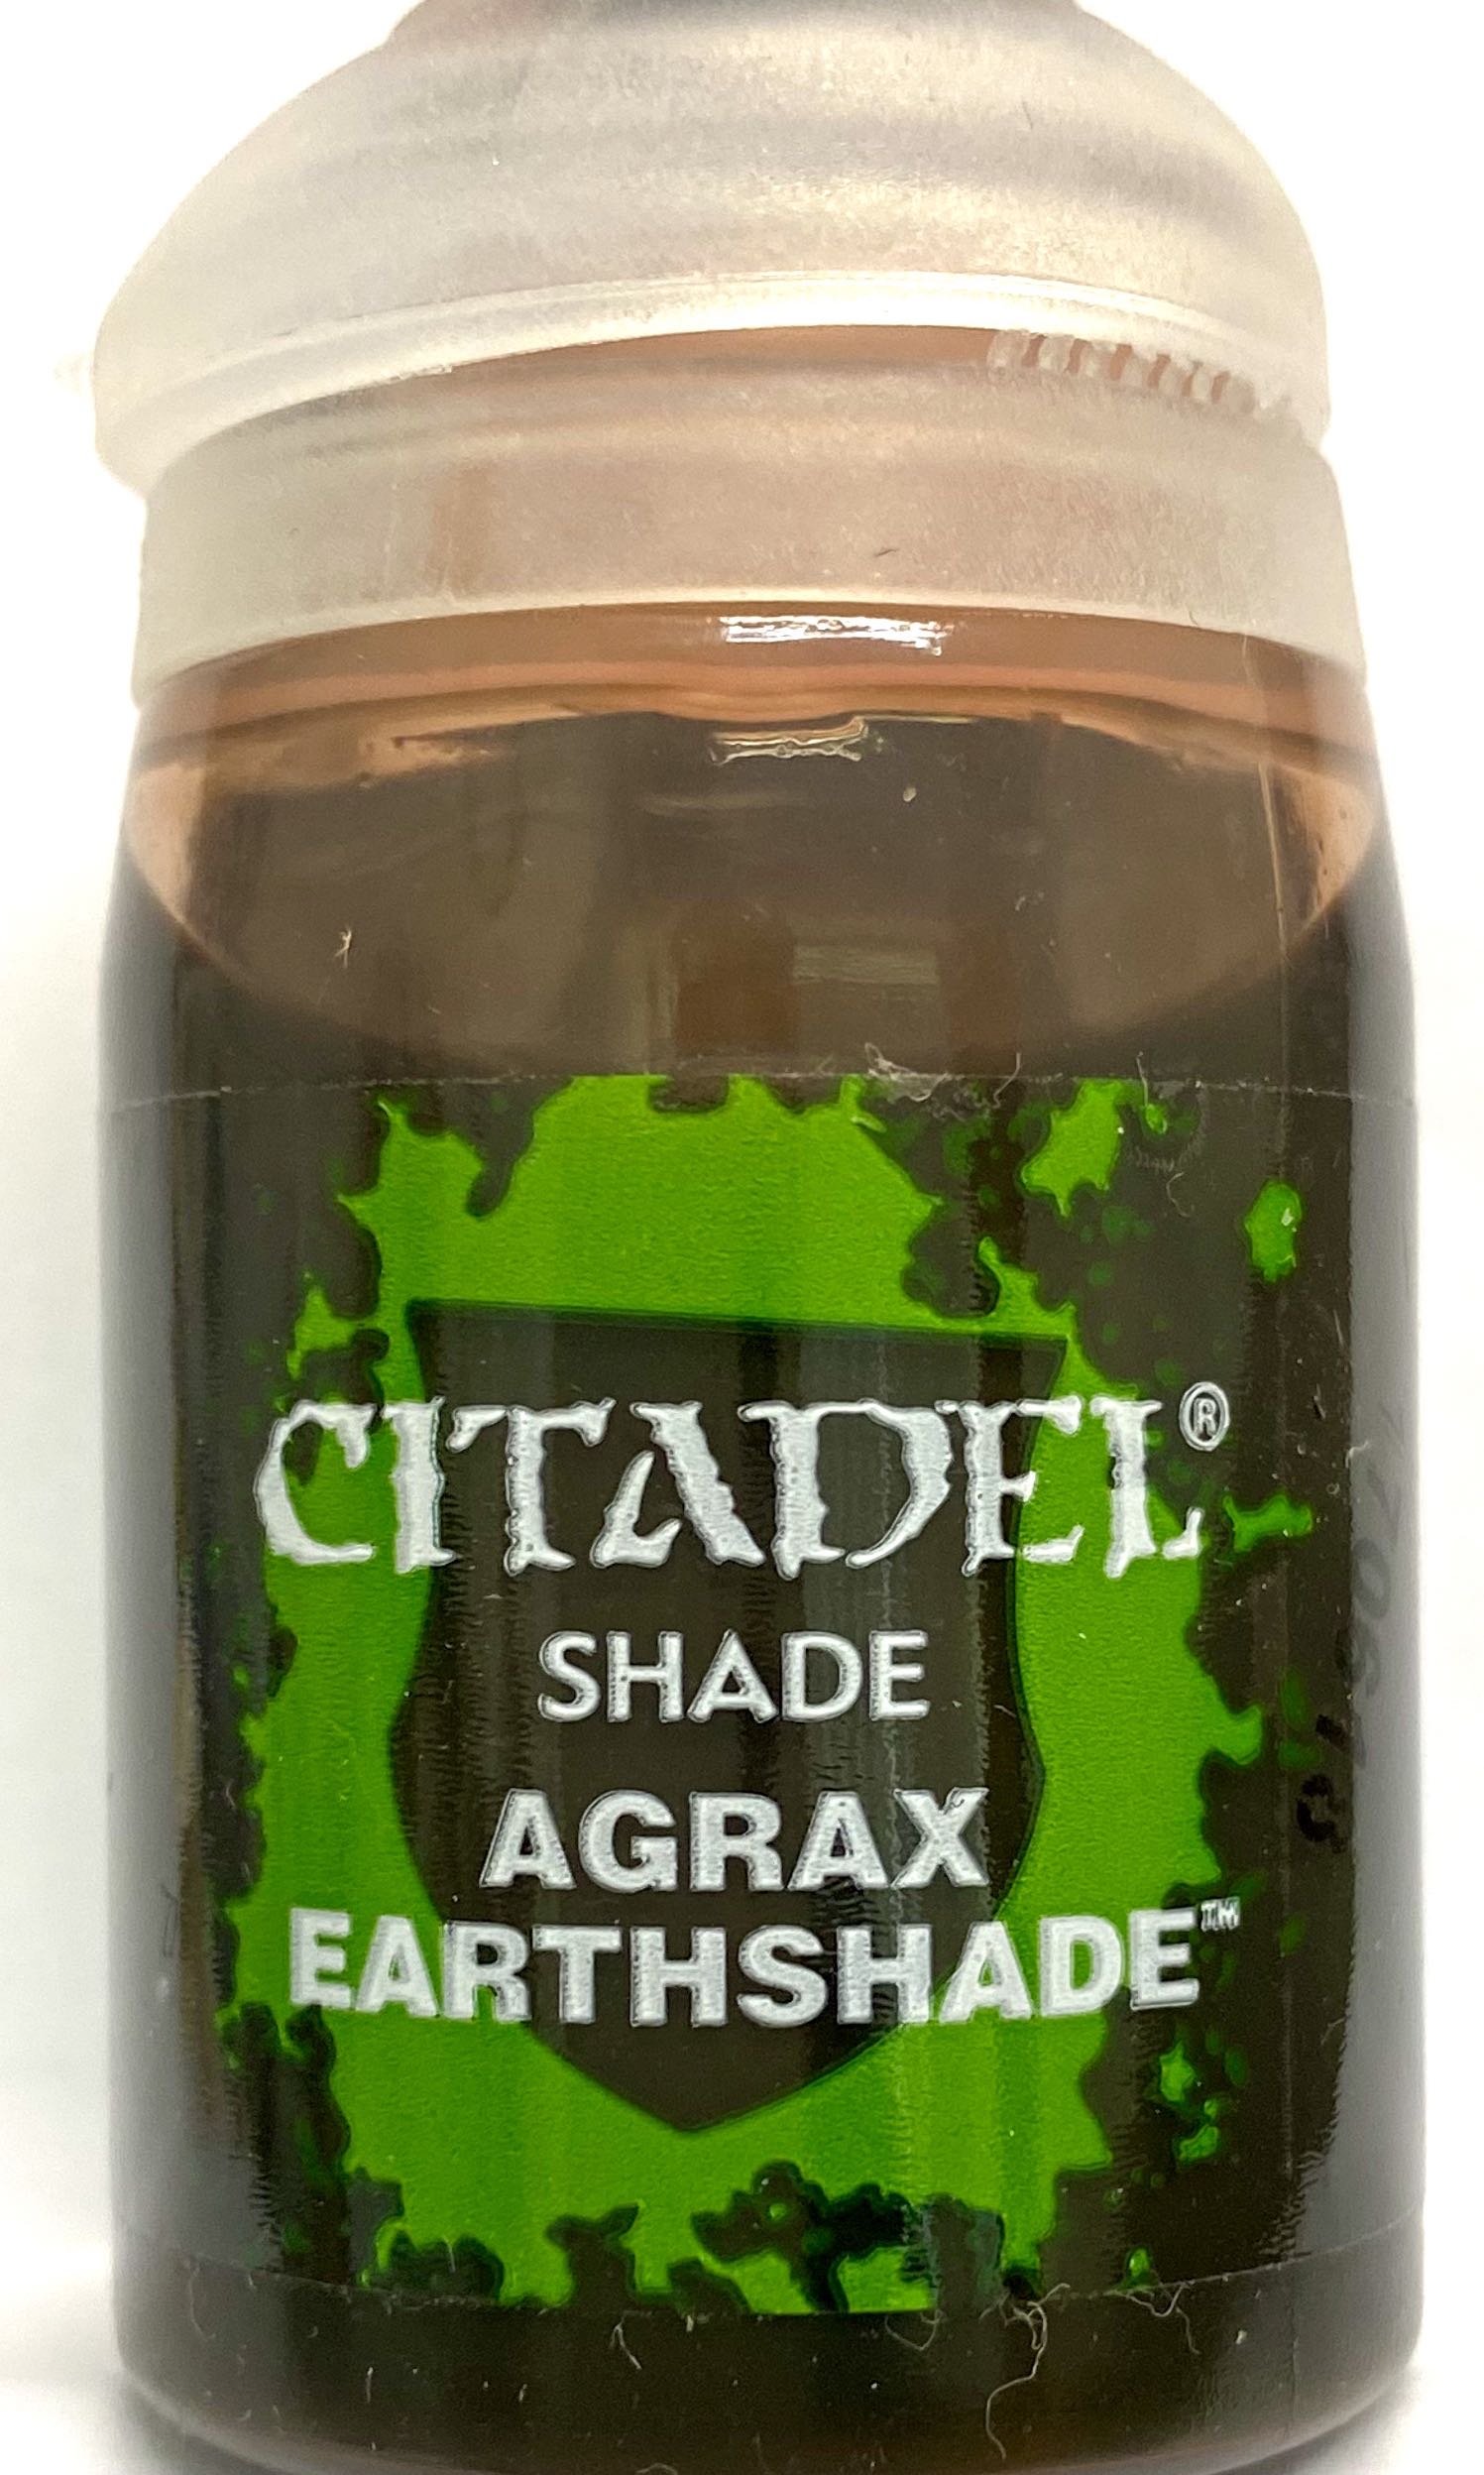 Citadel Shade: Agrax Earthshade Gloss